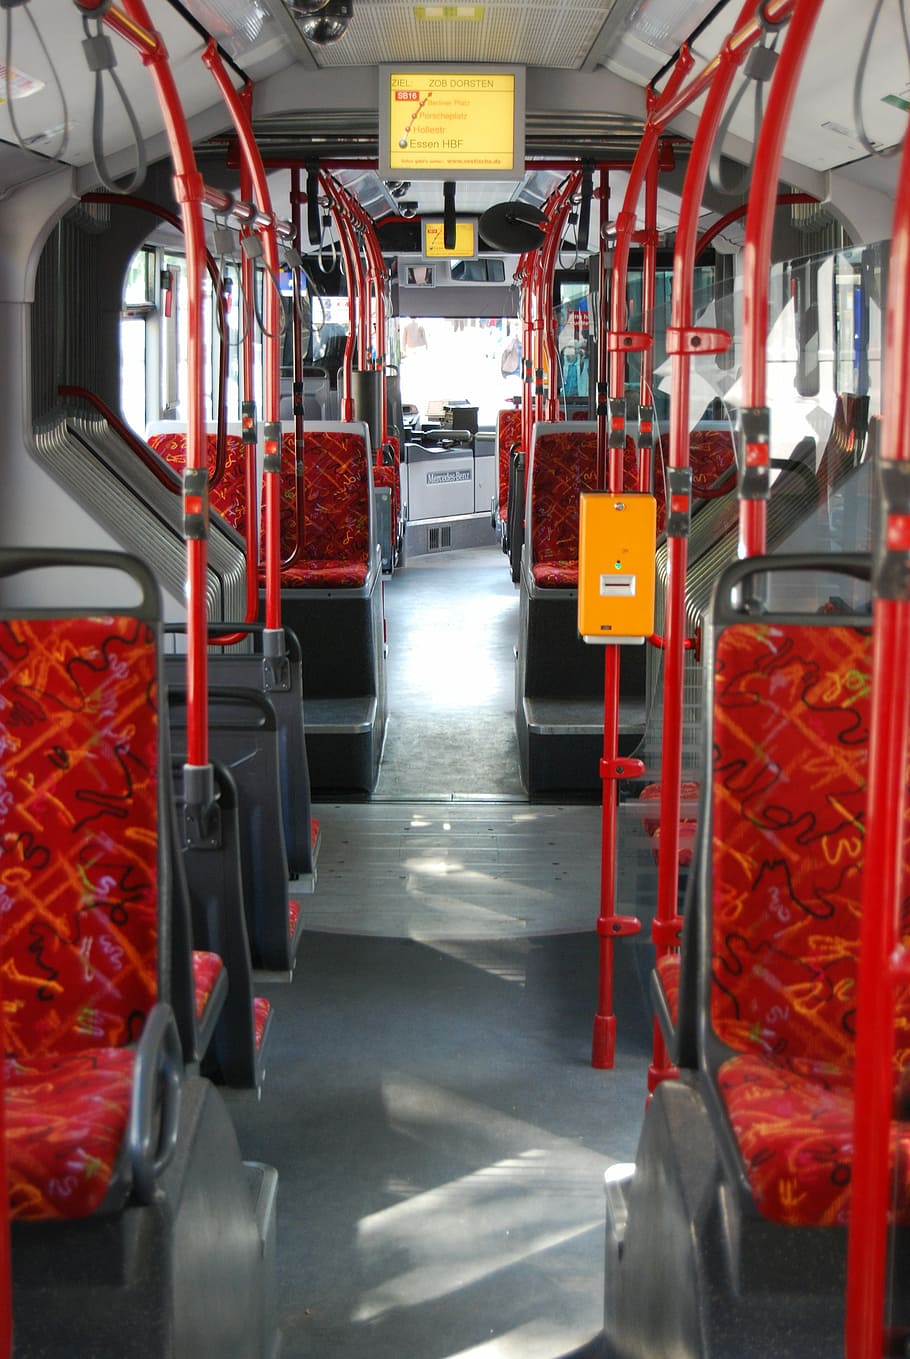 kursi belakang bus evag, makan, esens verkehrs ag, merah, berturut-turut, di dalam ruangan, tidak ada orang, kosong, transportasi, industri